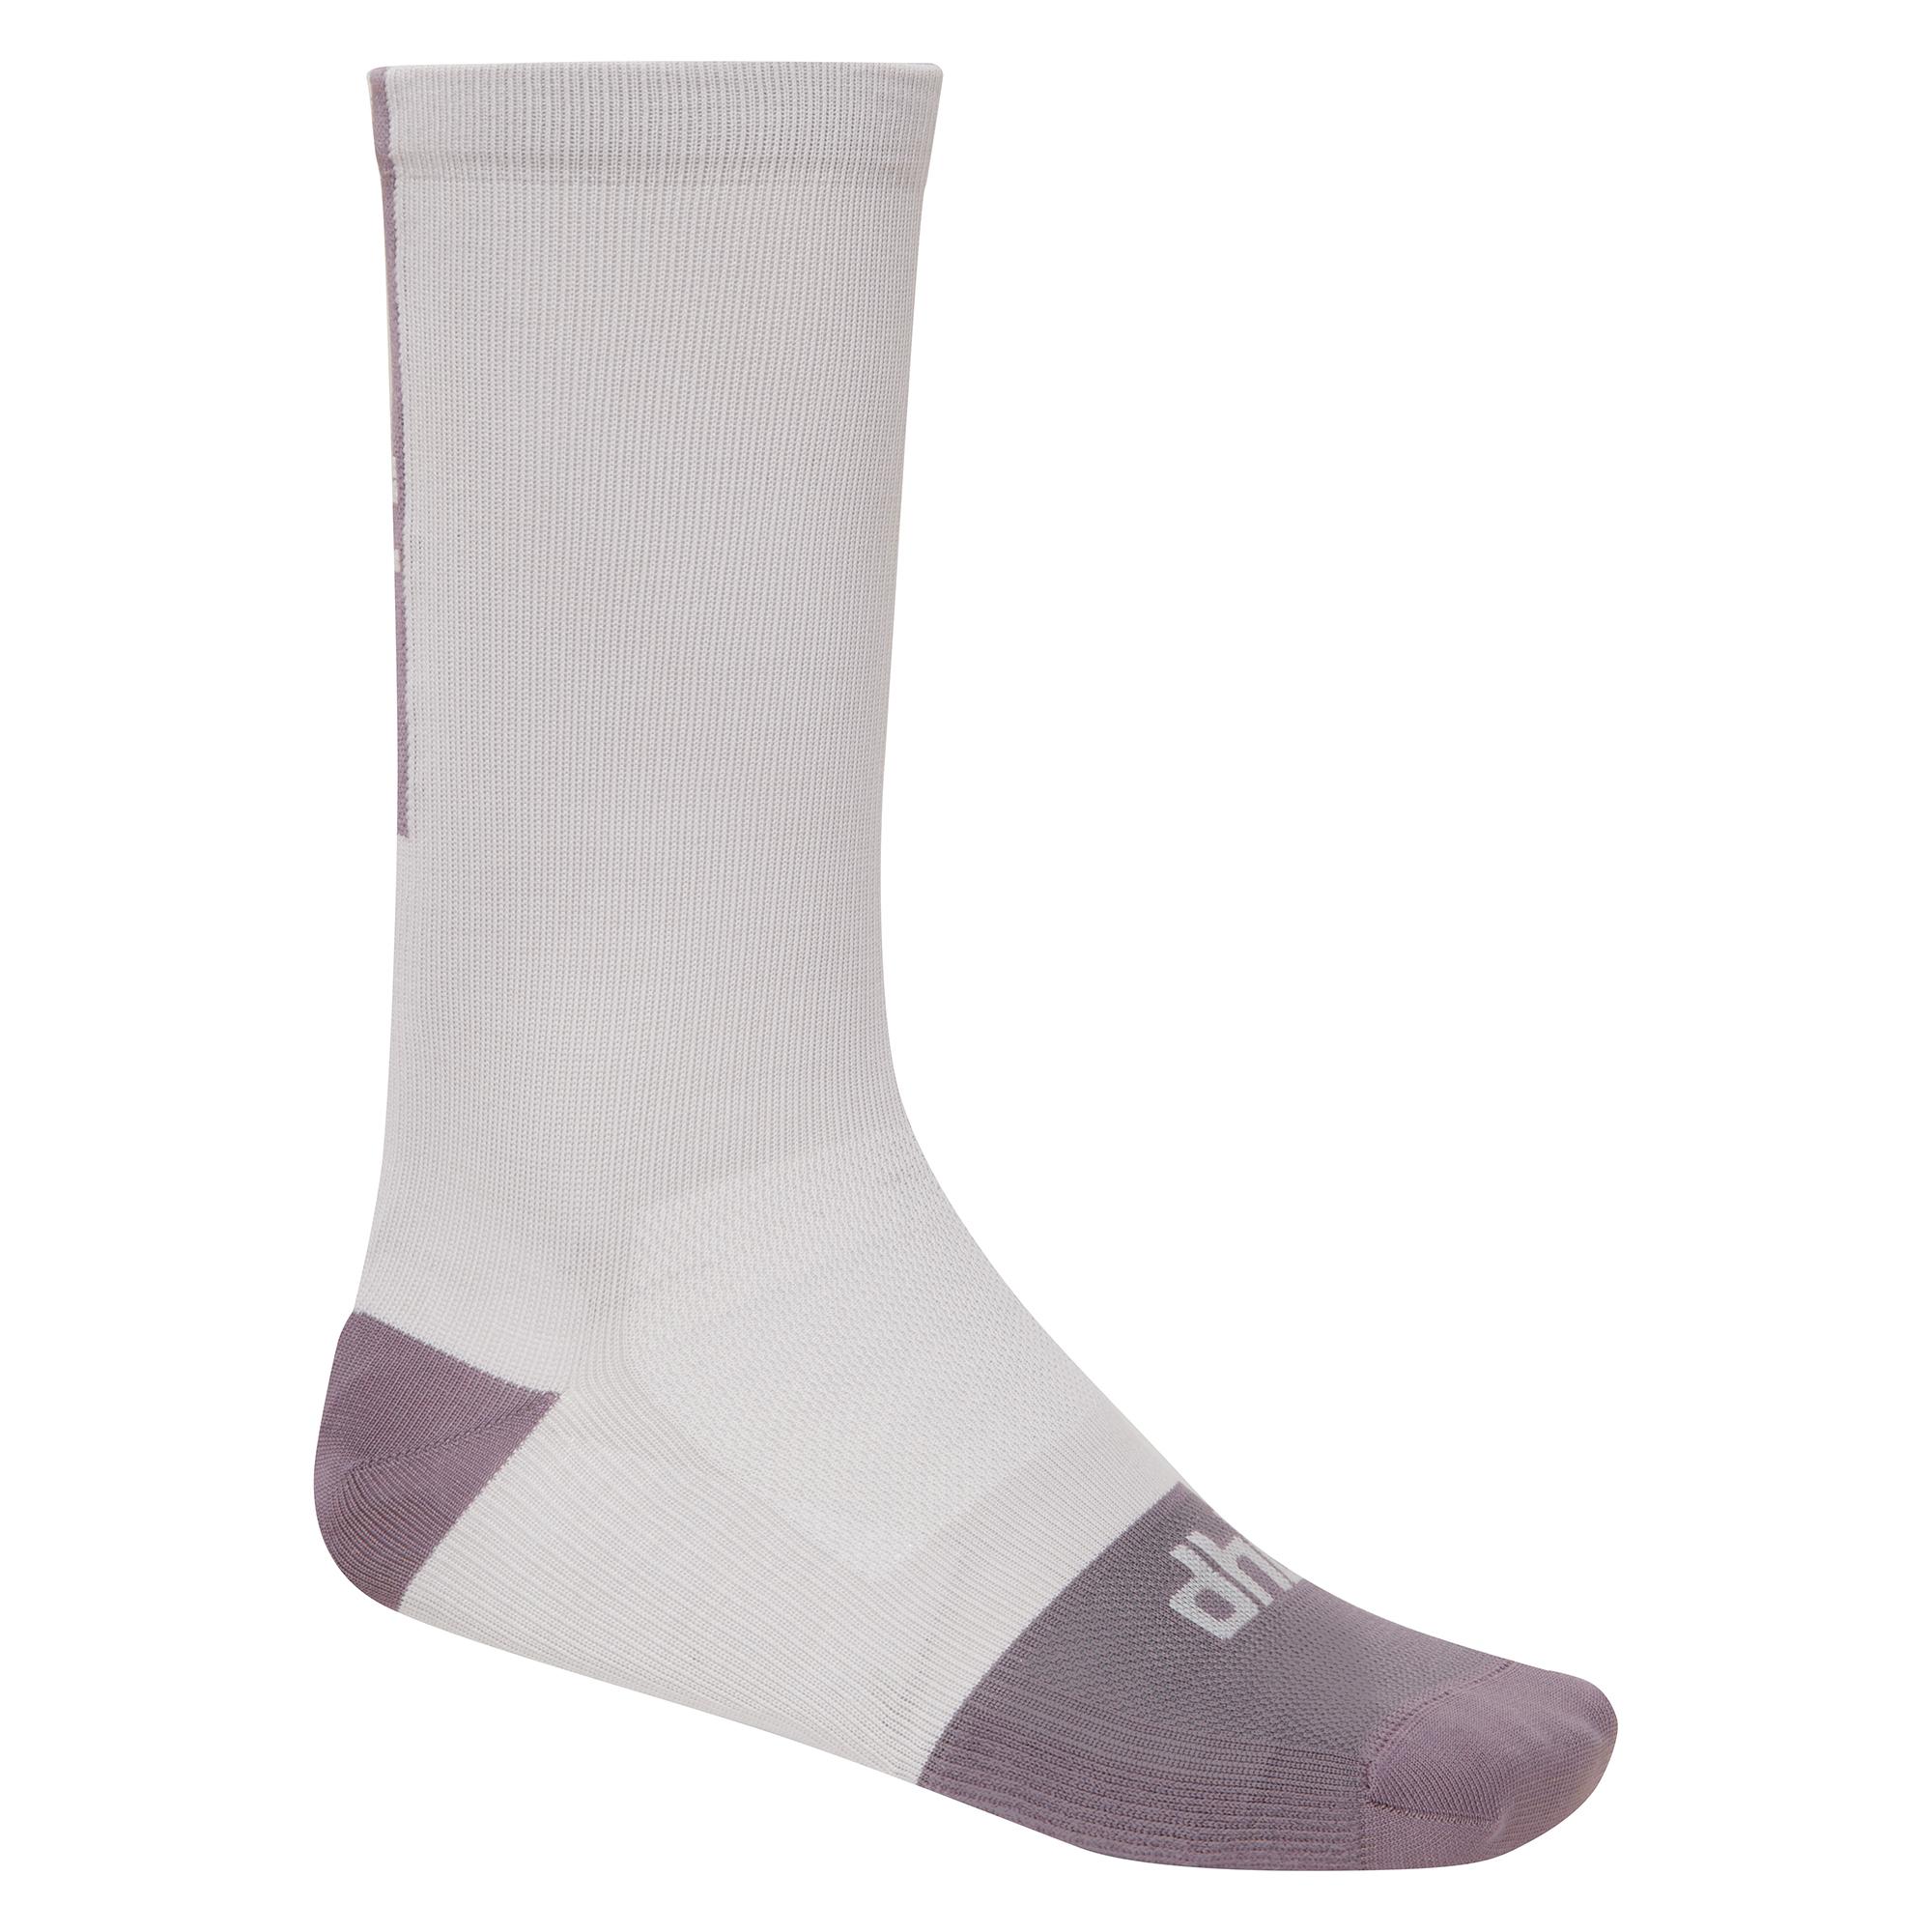 Dhb Aeron Tall Sock - Grey/aubergine